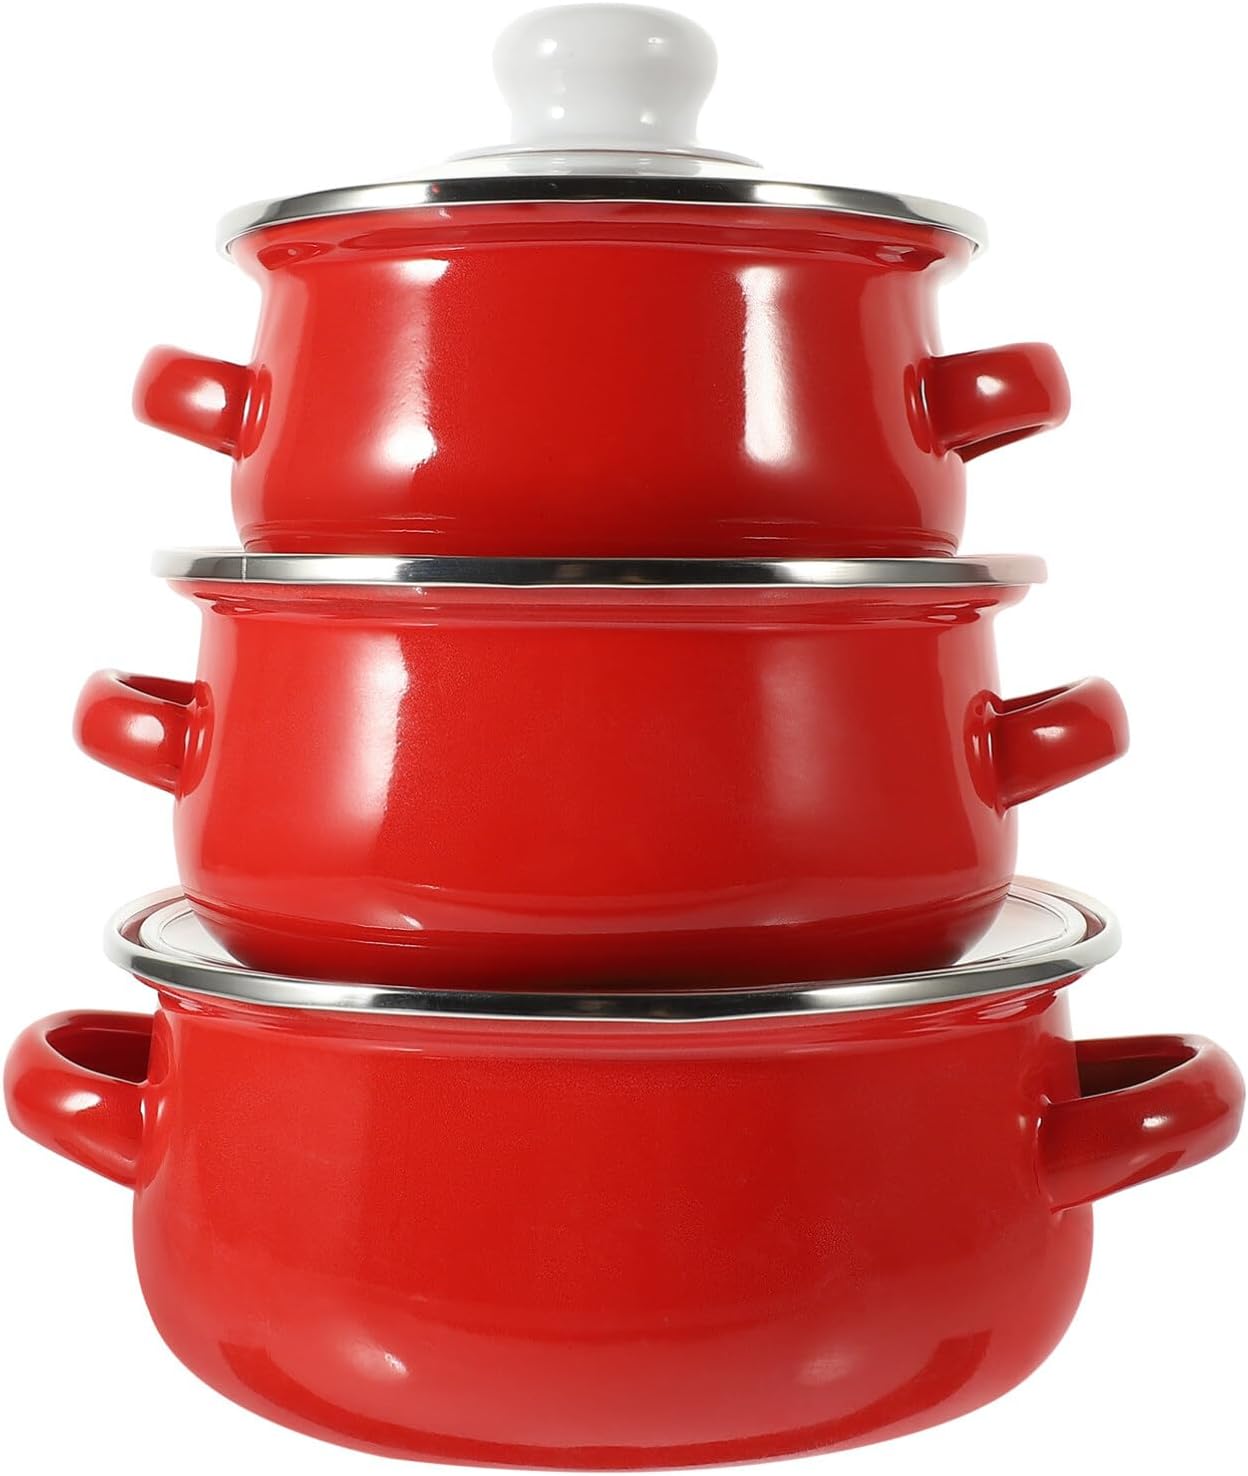 BESTOYARD 3pcs Enamel Stock Pot Set Enamelware Cooking Pot Binaural Soup Pot Nesting Stew Pots with Lids Nonstick Gas Stove Cookware for Home Restaurant Supplies Red